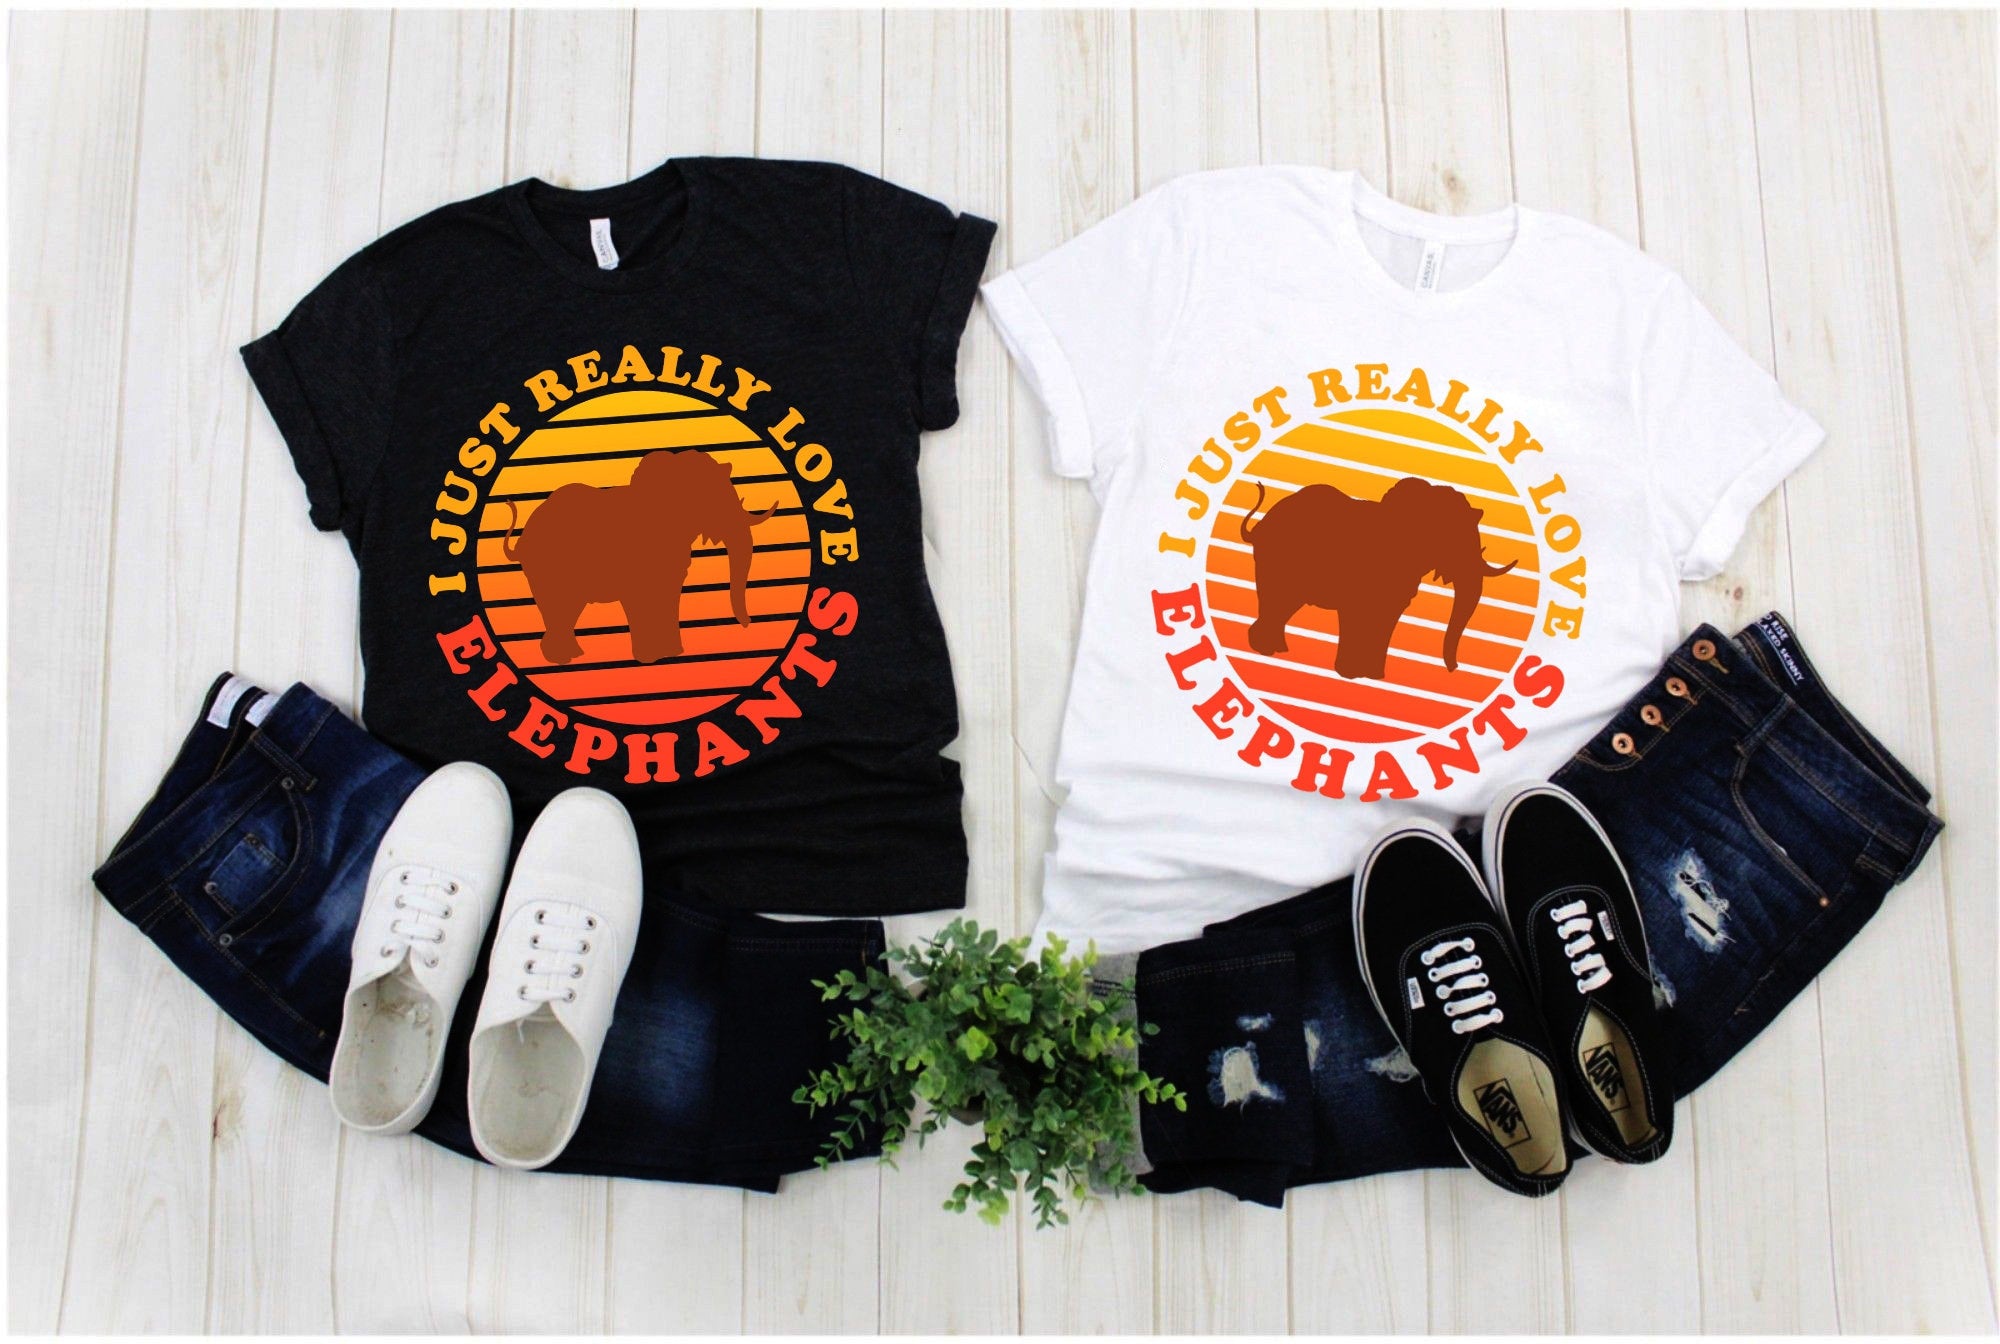 Mahal Ko Lang Talaga ang Elepante | Mga Retro Sunset T-Shirt - plusminusco.com